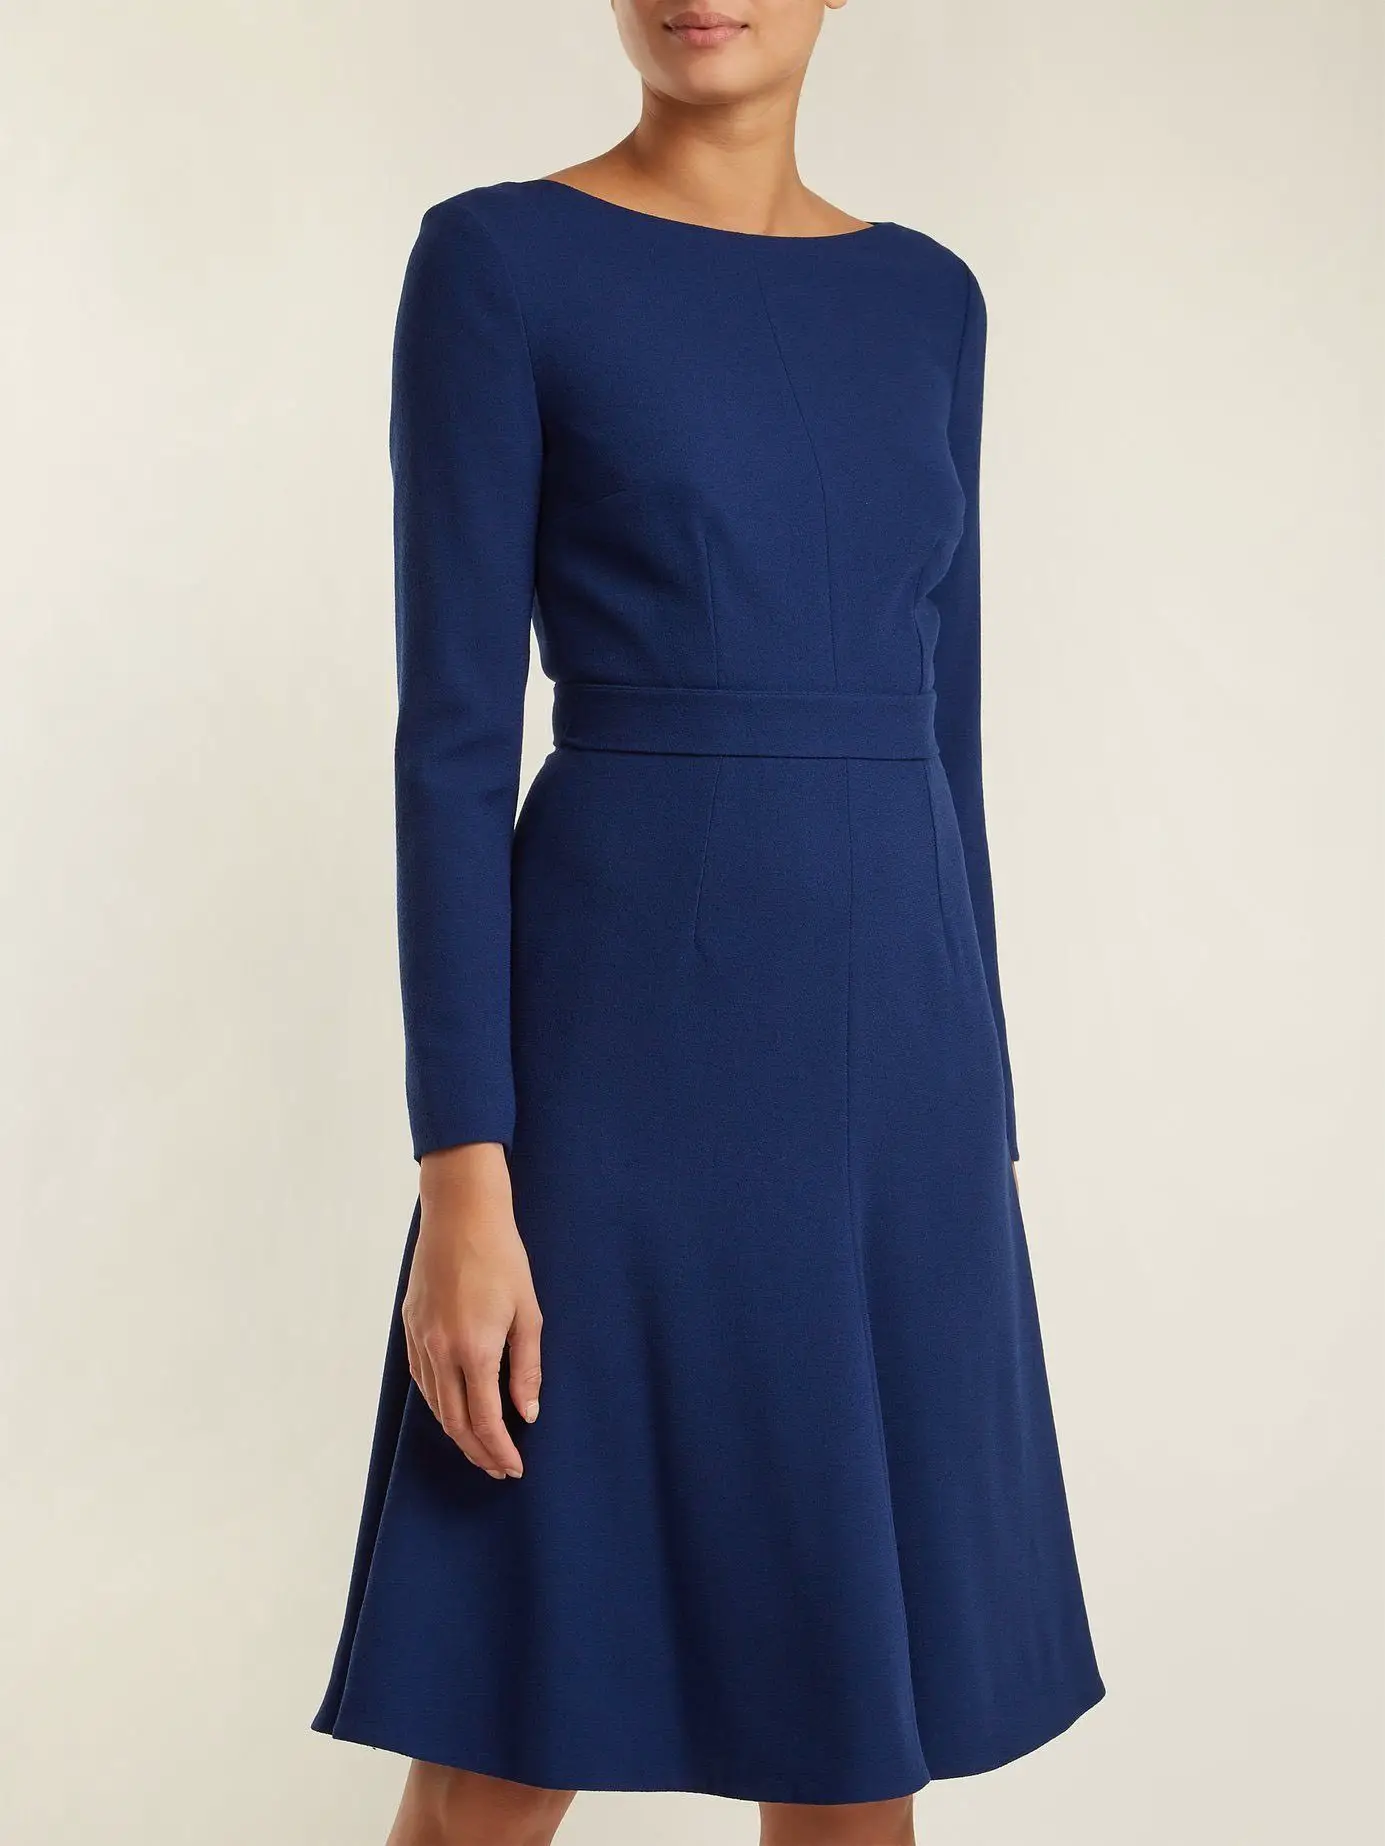 Emilia Wickstead Kate Dress in Blue